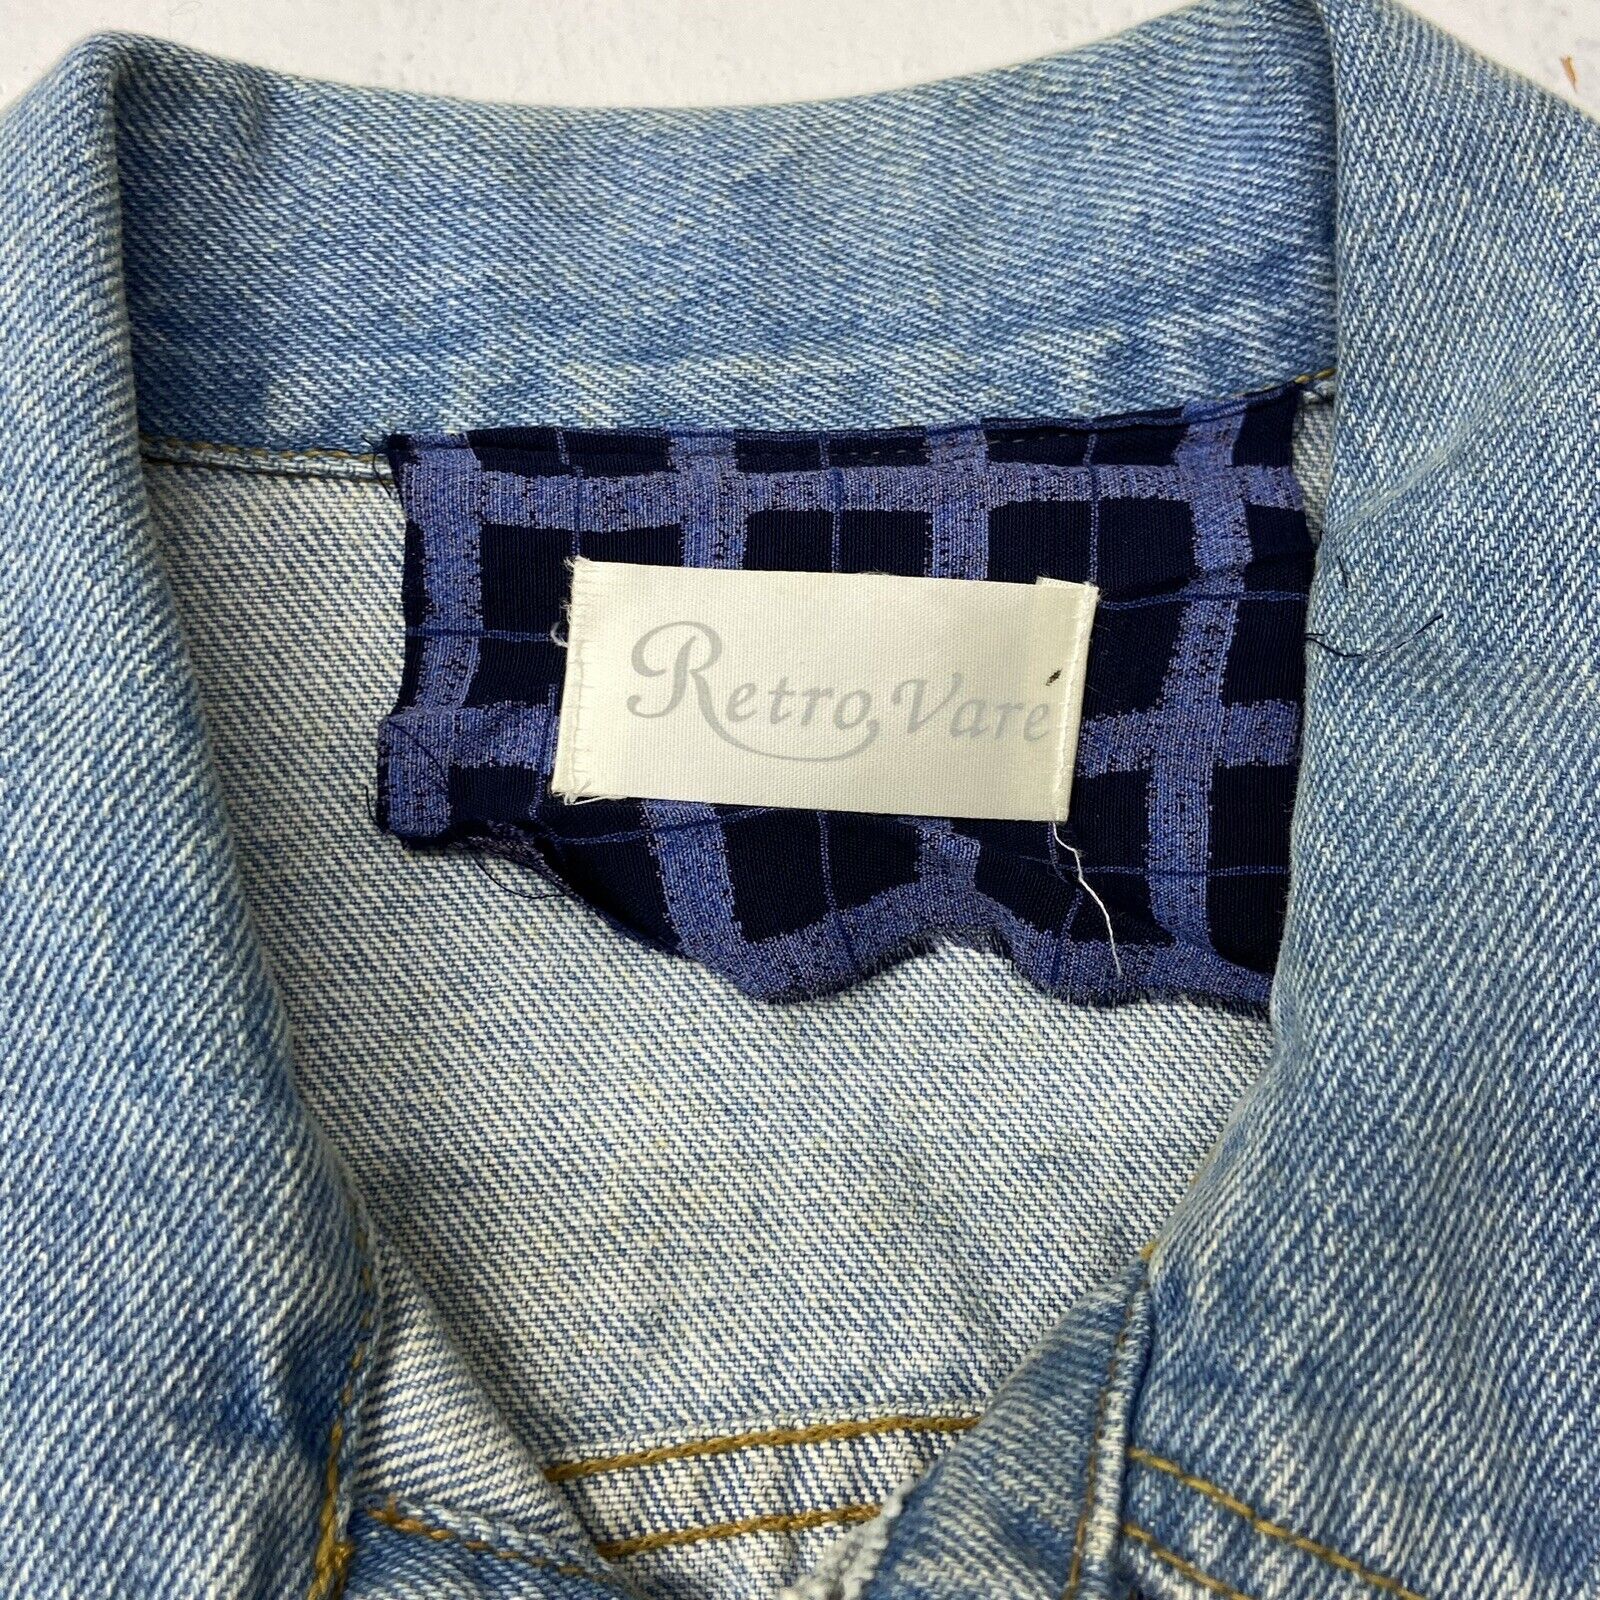 Retro Vare Repurposed Blue Denim Cropped Jean Jacket Women Size L/XL -  beyond exchange